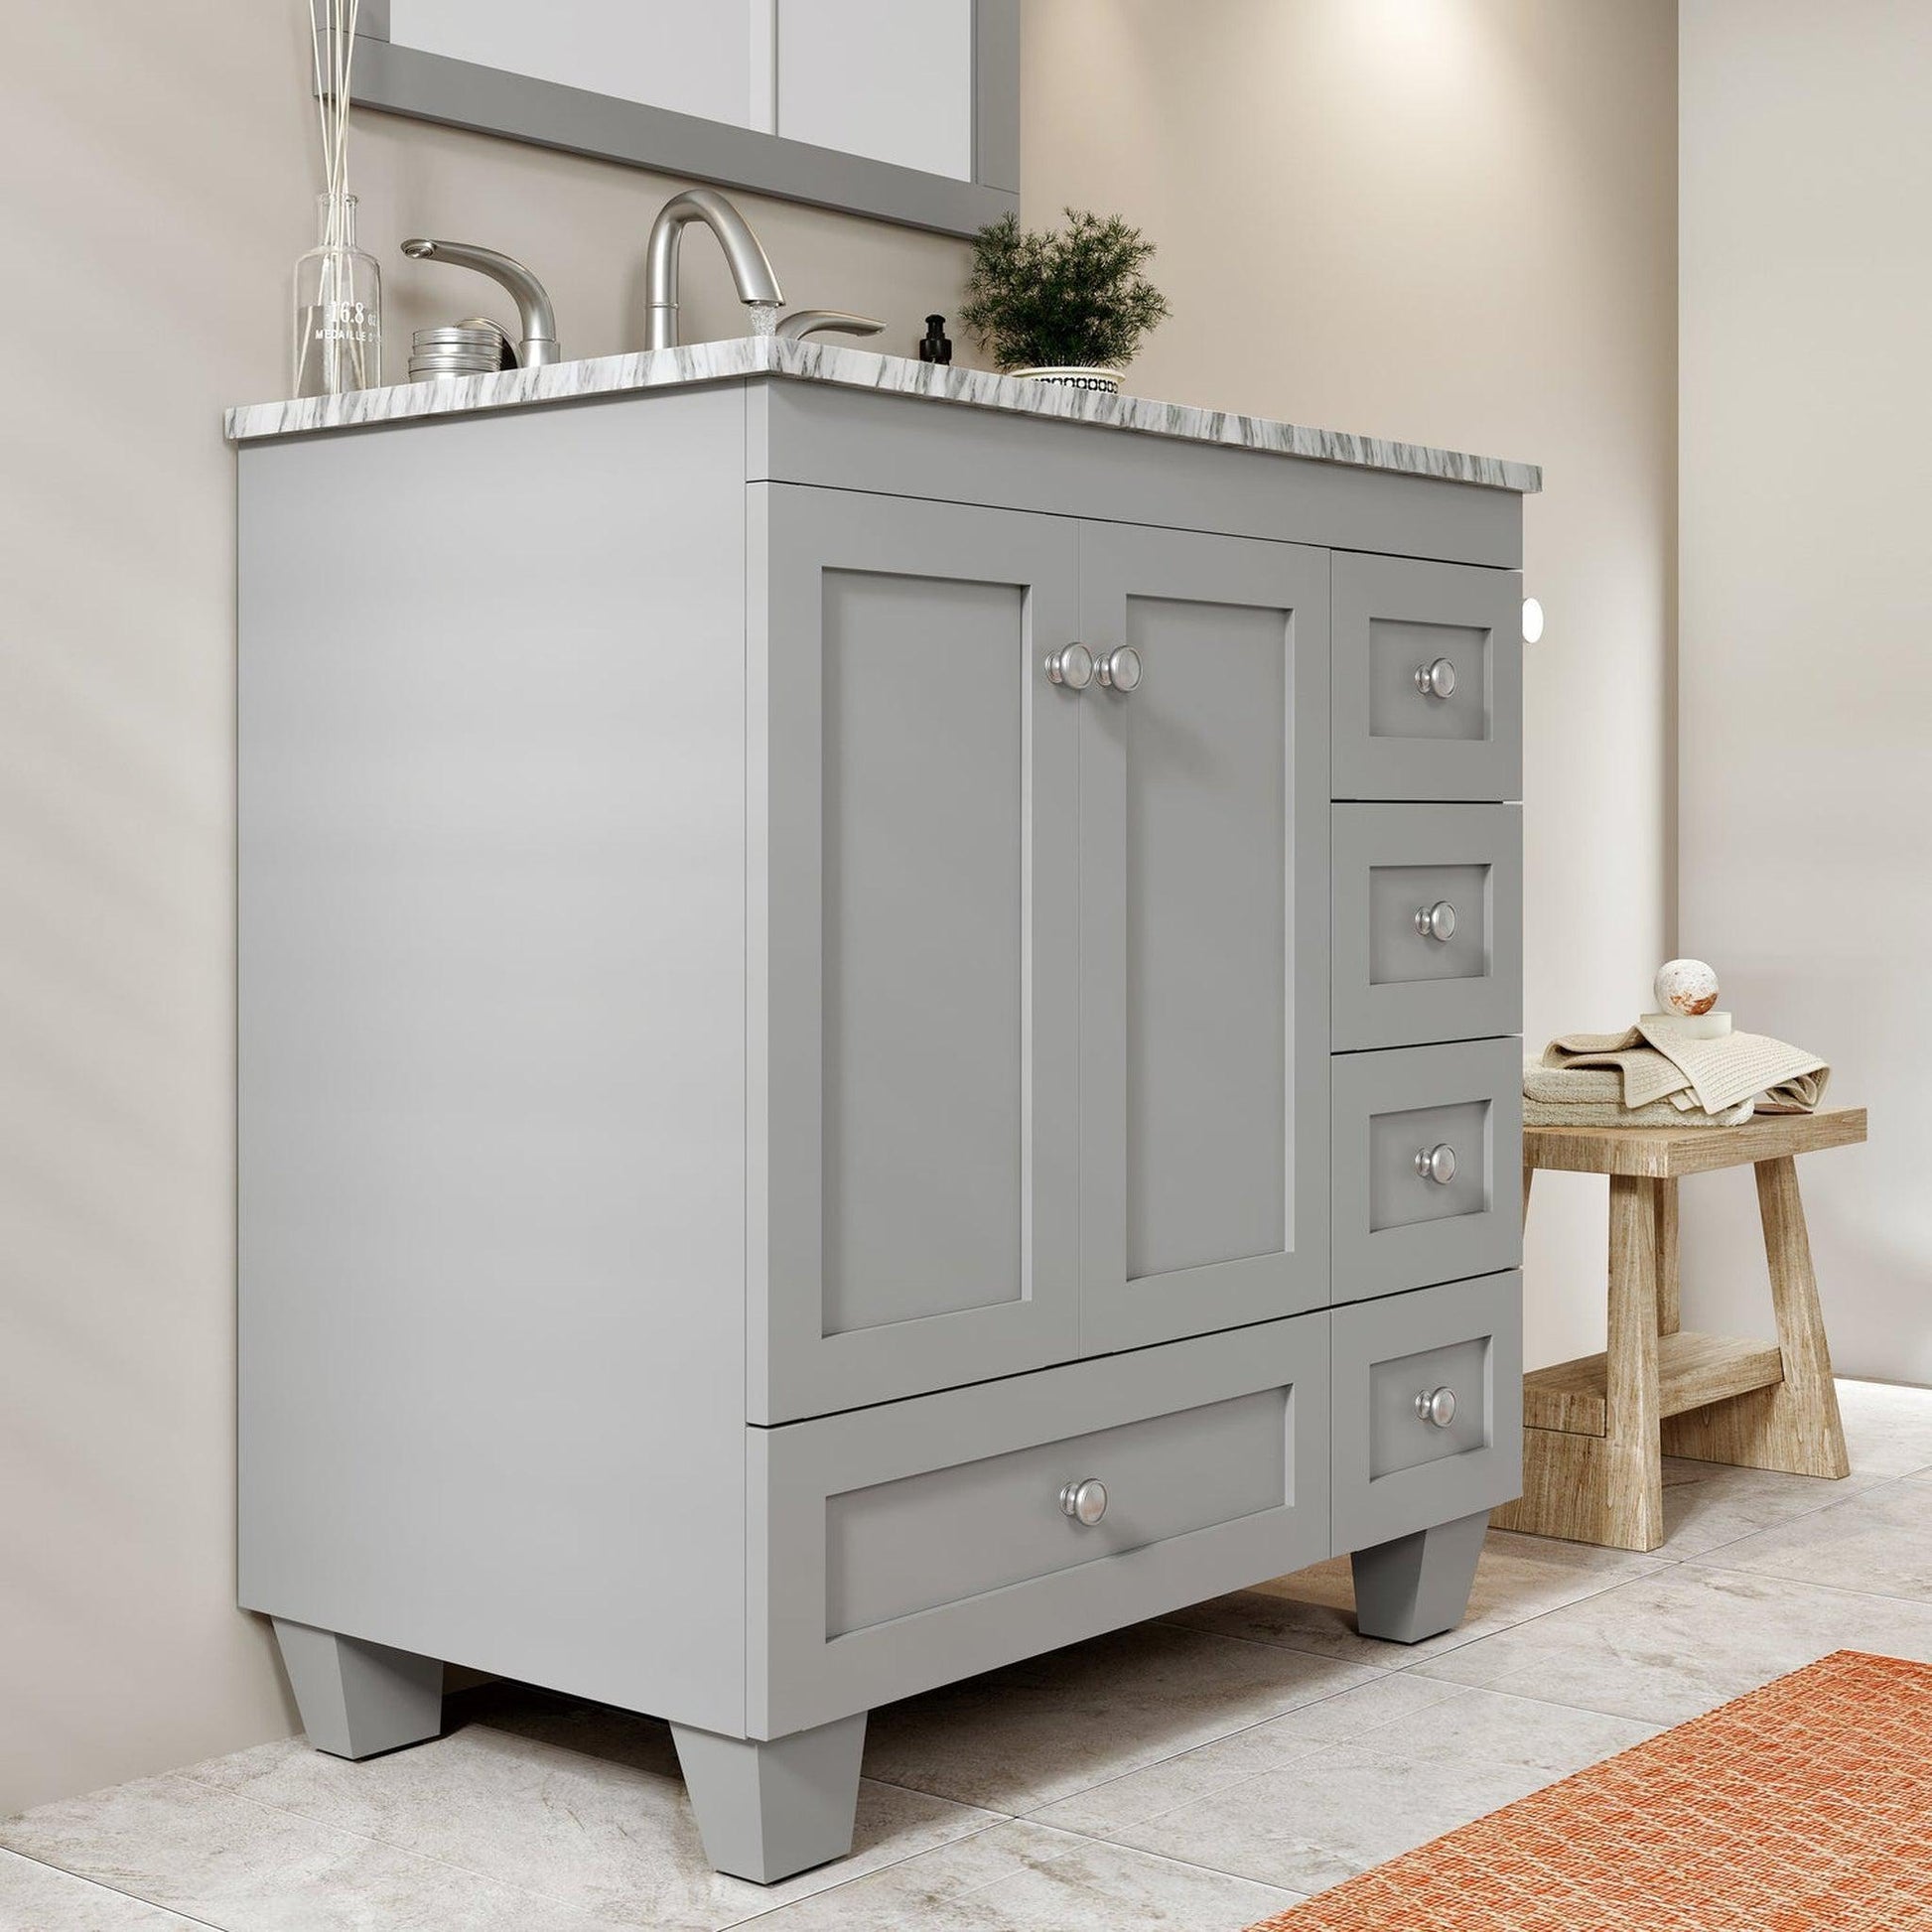 Eviva Acclaim 30" x 34" Gray Freestanding Bathroom Vanity With White Carrara Marble Countertop and Single Undermount Sink